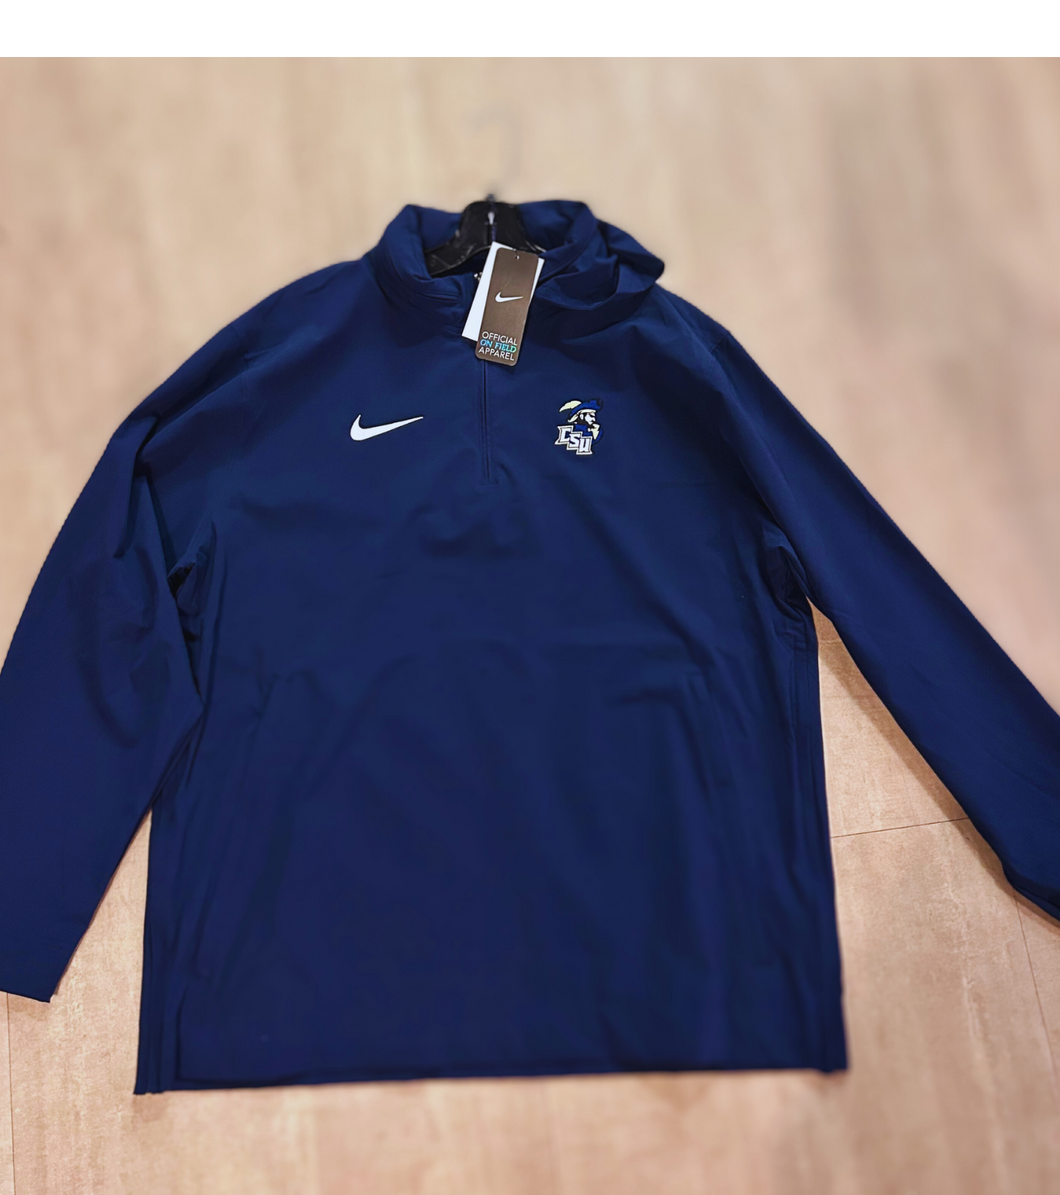 Coach's Jacket by Nike, Navy (SIDELINE23)